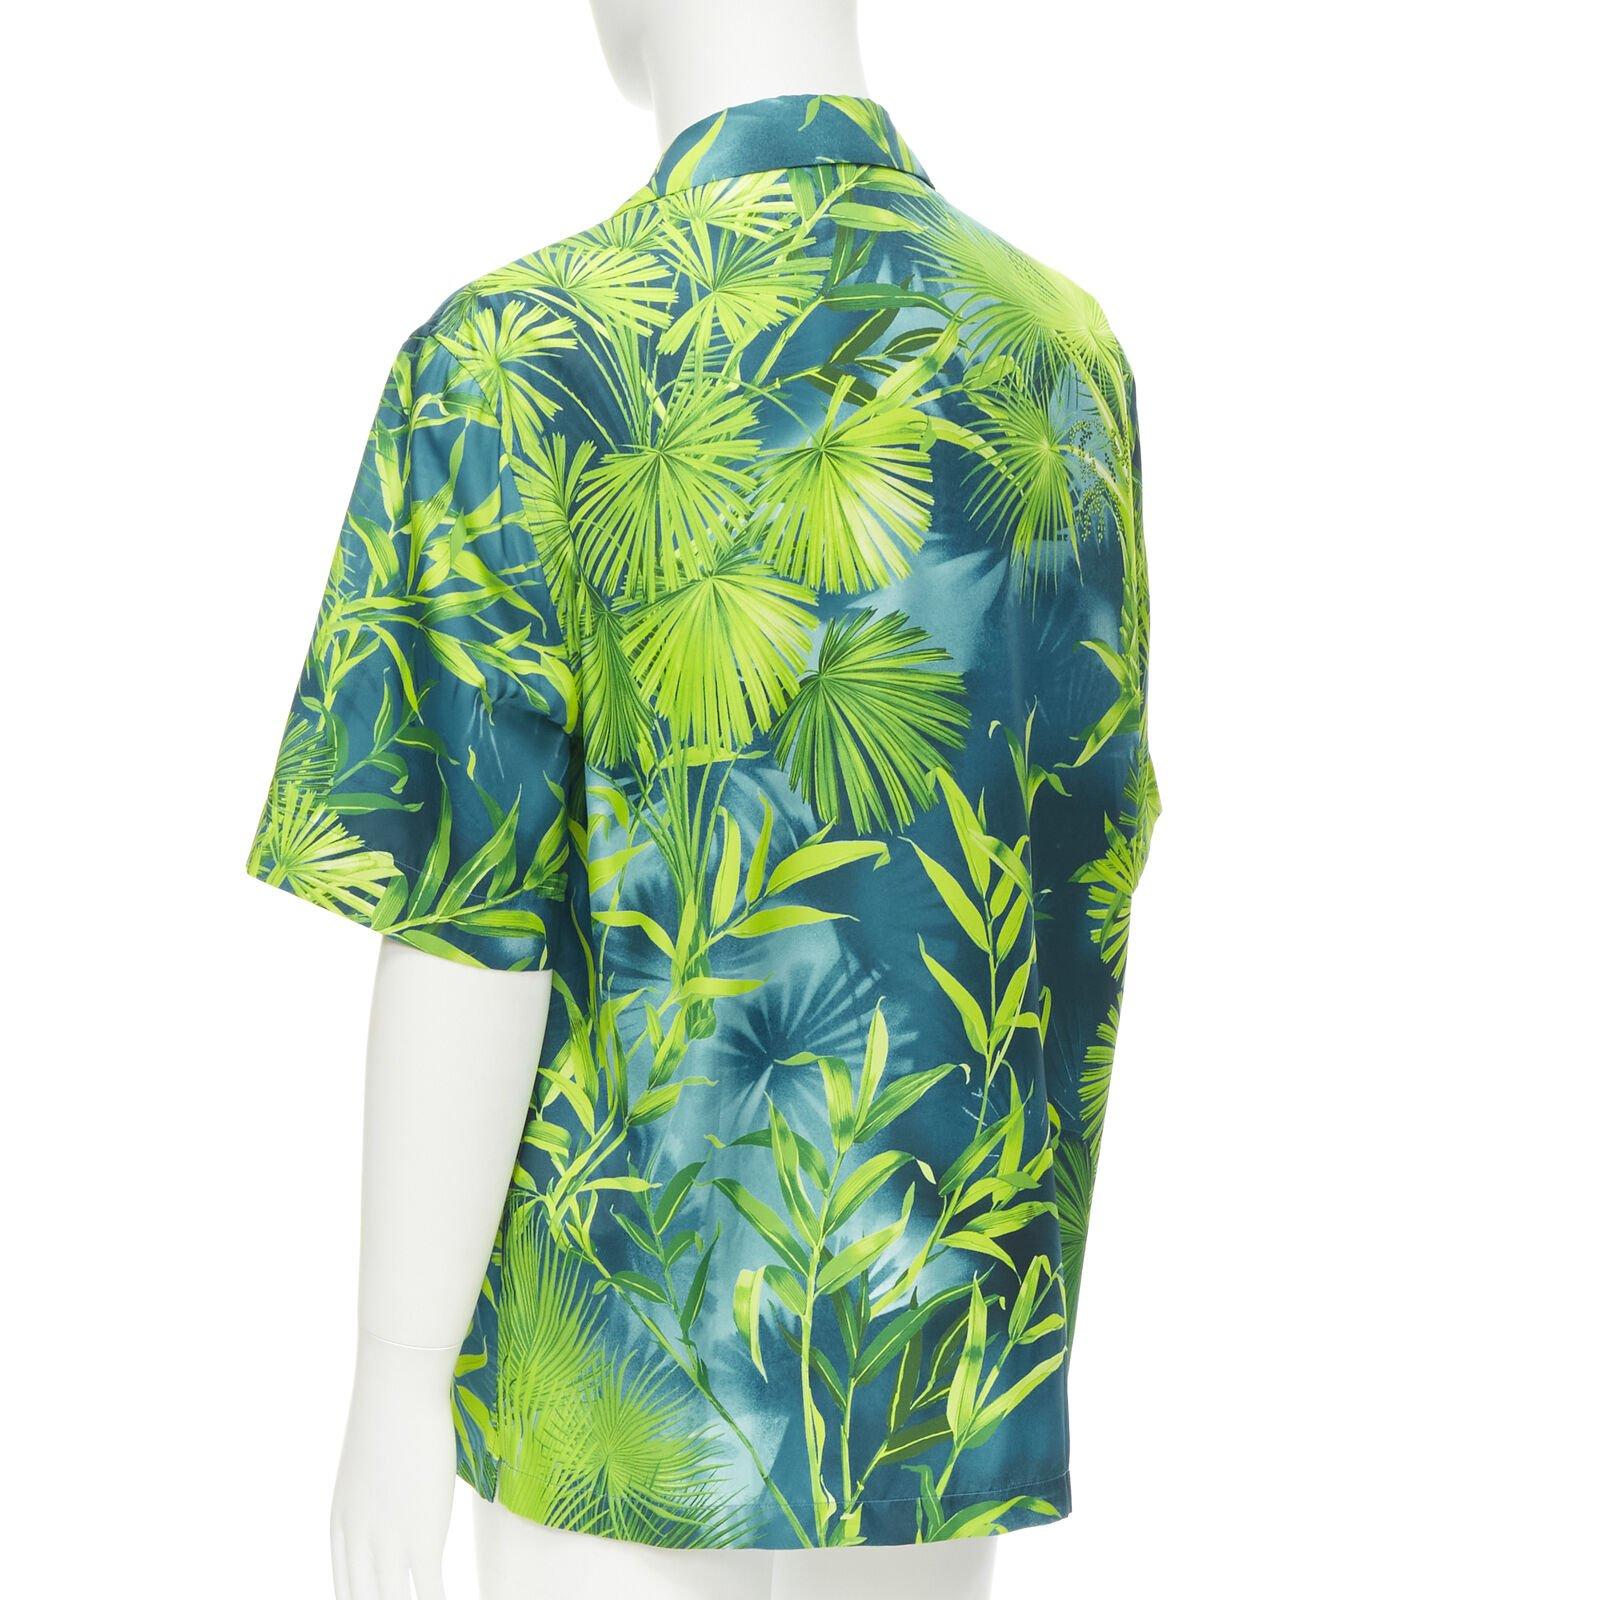 VERSACE 2020 Iconic JLo Jungle print green tropical print shirt EU41 XL 2